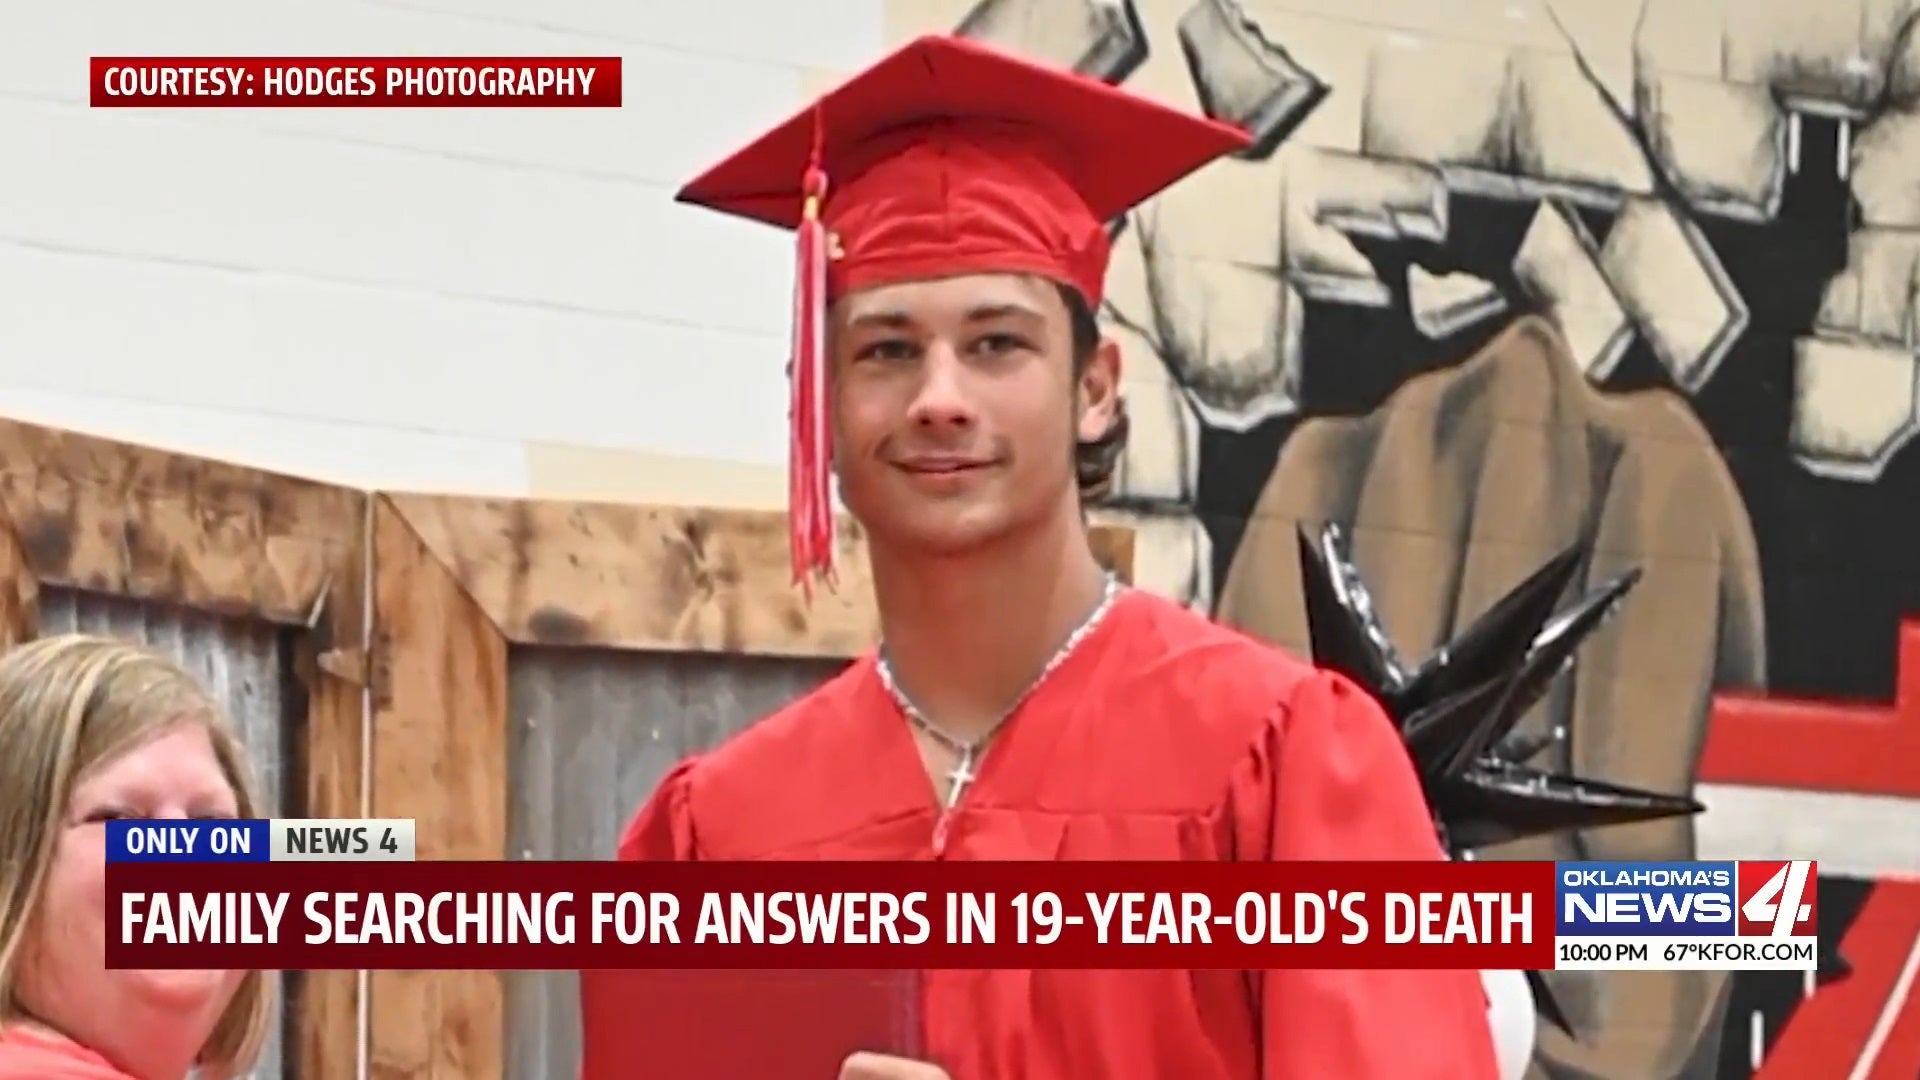 Noah Presgrove had graduated high school just a few months before his death in rural Oklahoma